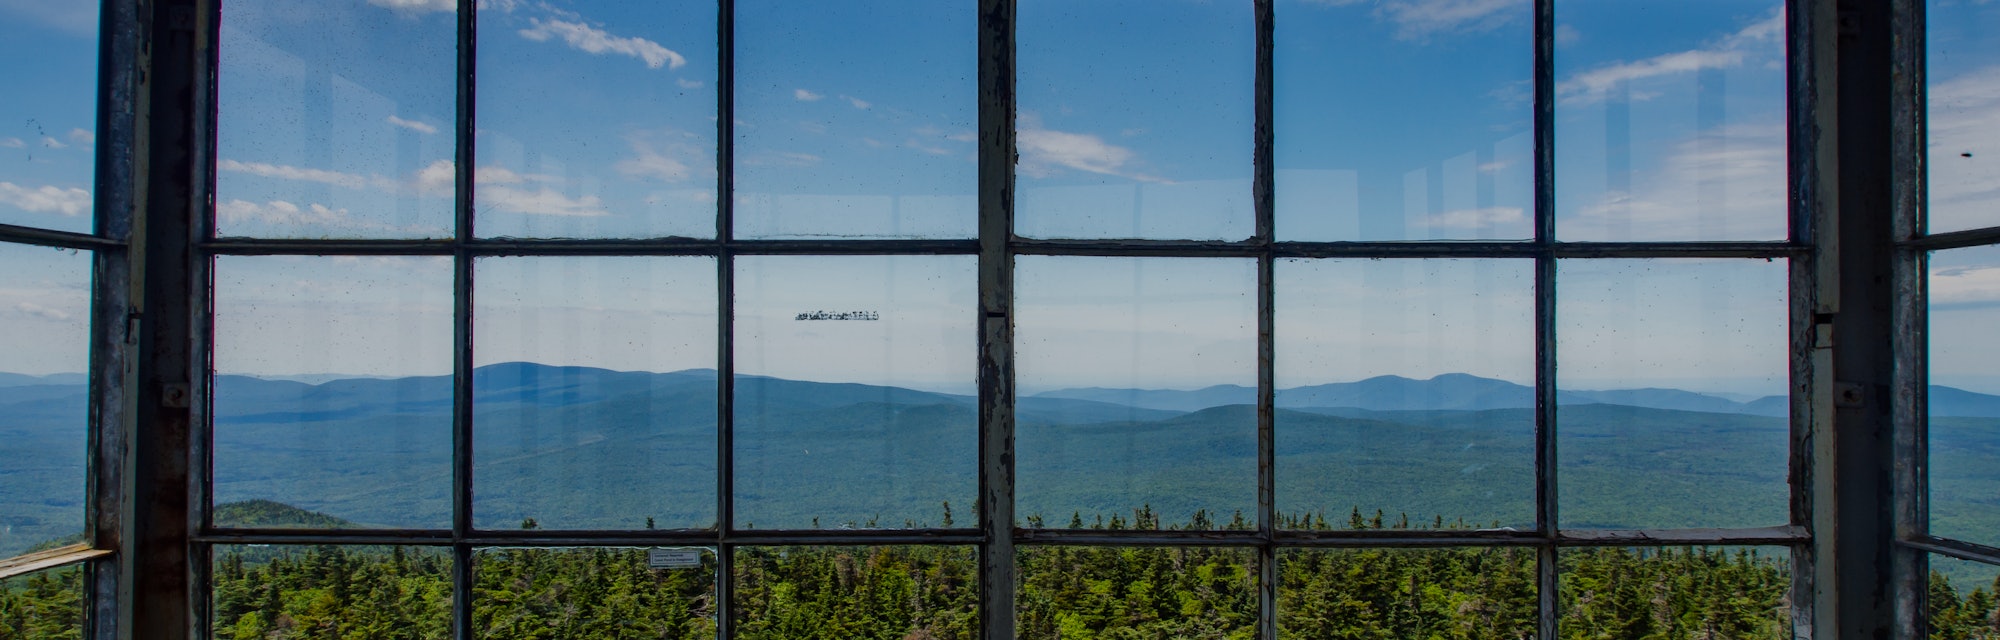 Fire Tower View, Stratton Mountain, Green Mountains, Vermont